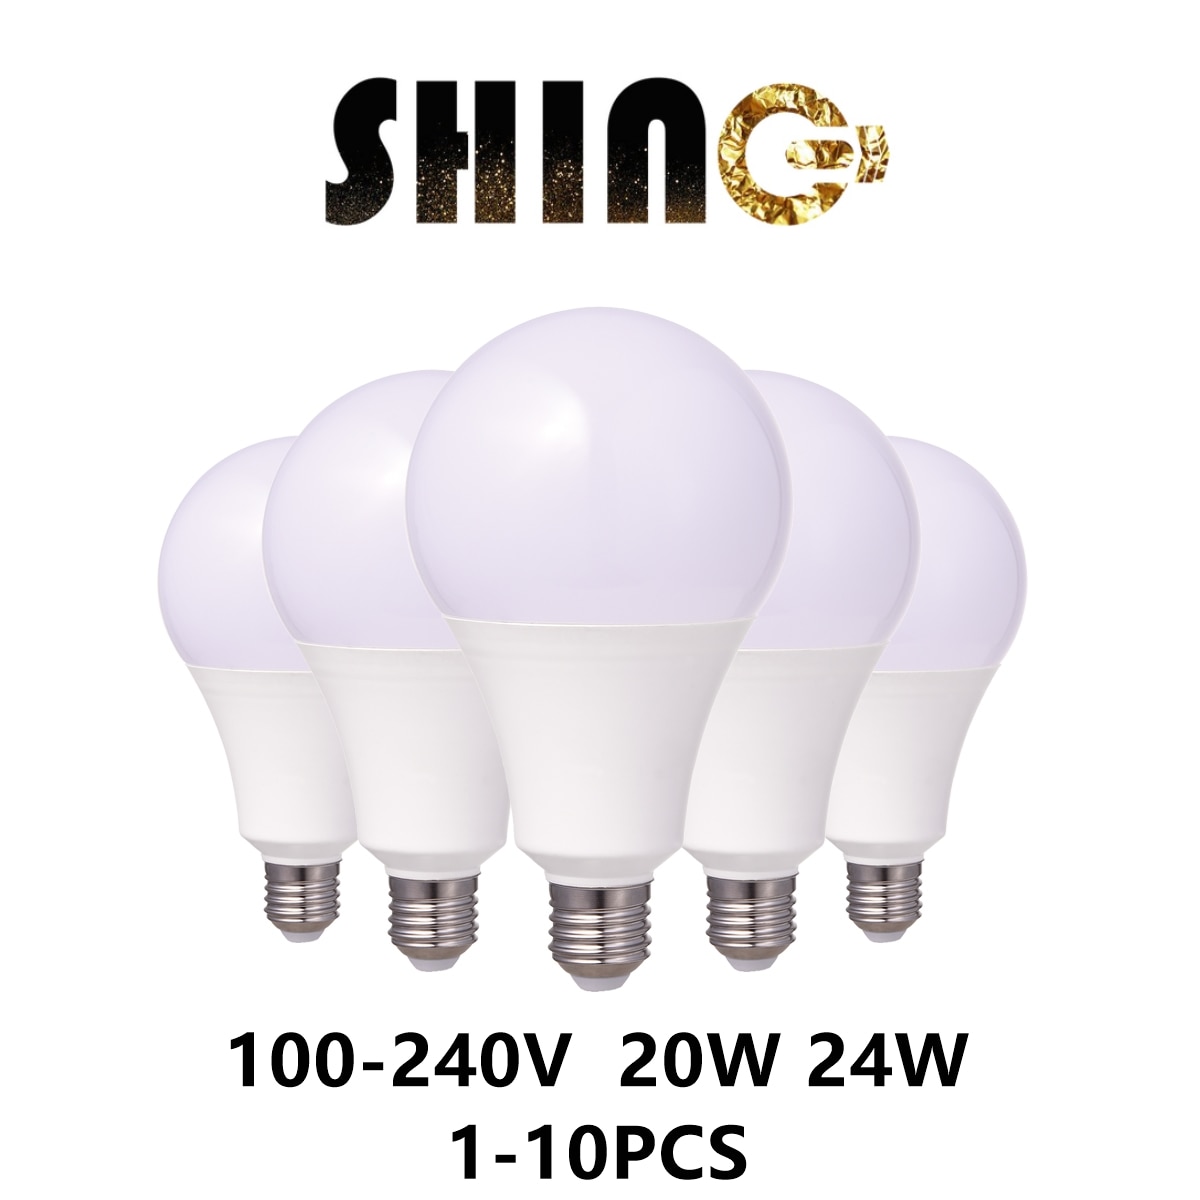 LED 고출력 전구, 스트로브 없음, 쇼핑몰 홈 조명에 적합, 높은 광 효율, A80, 100V-240V, E27, B22, 20W, 24W, 1-10 개